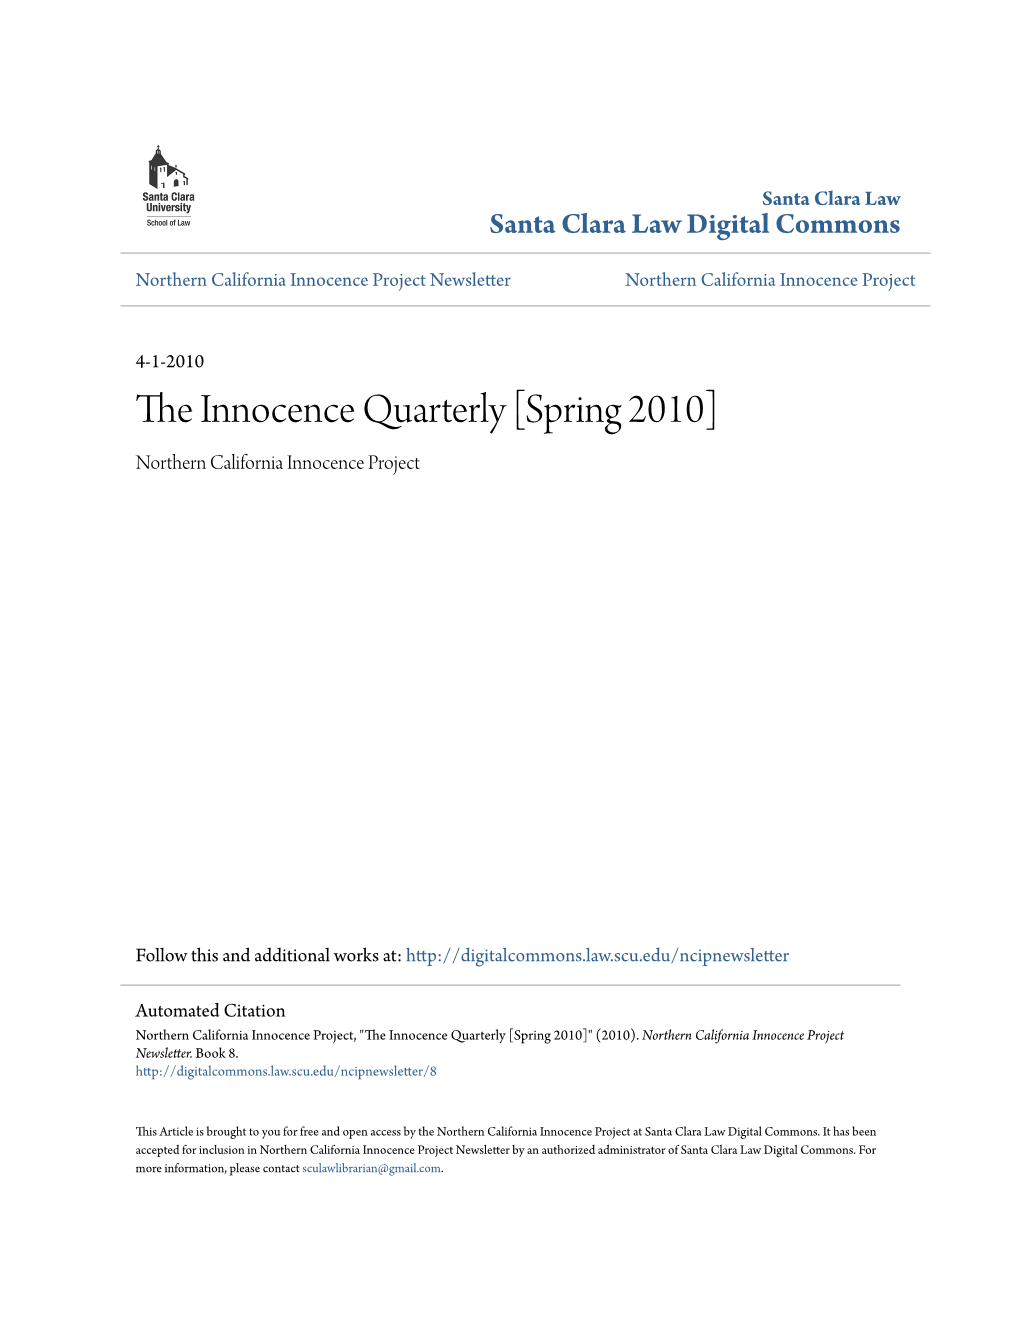 The Innocence Quarterly